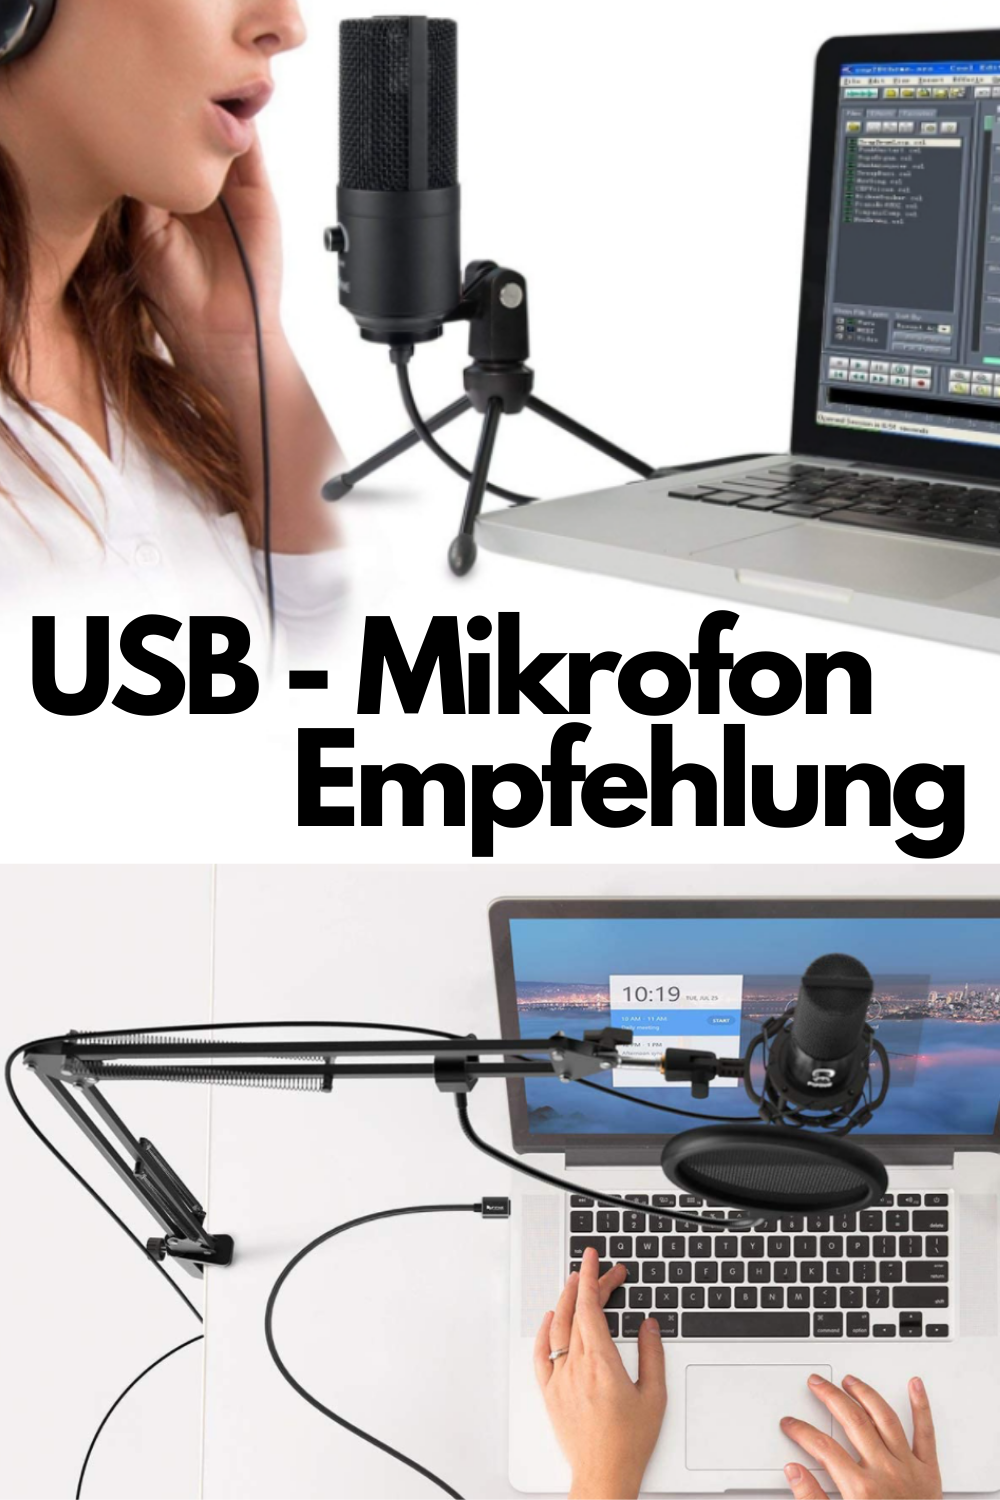 USB Mikrofon Empfehlung - FIFINE USB Mikrofon - K669